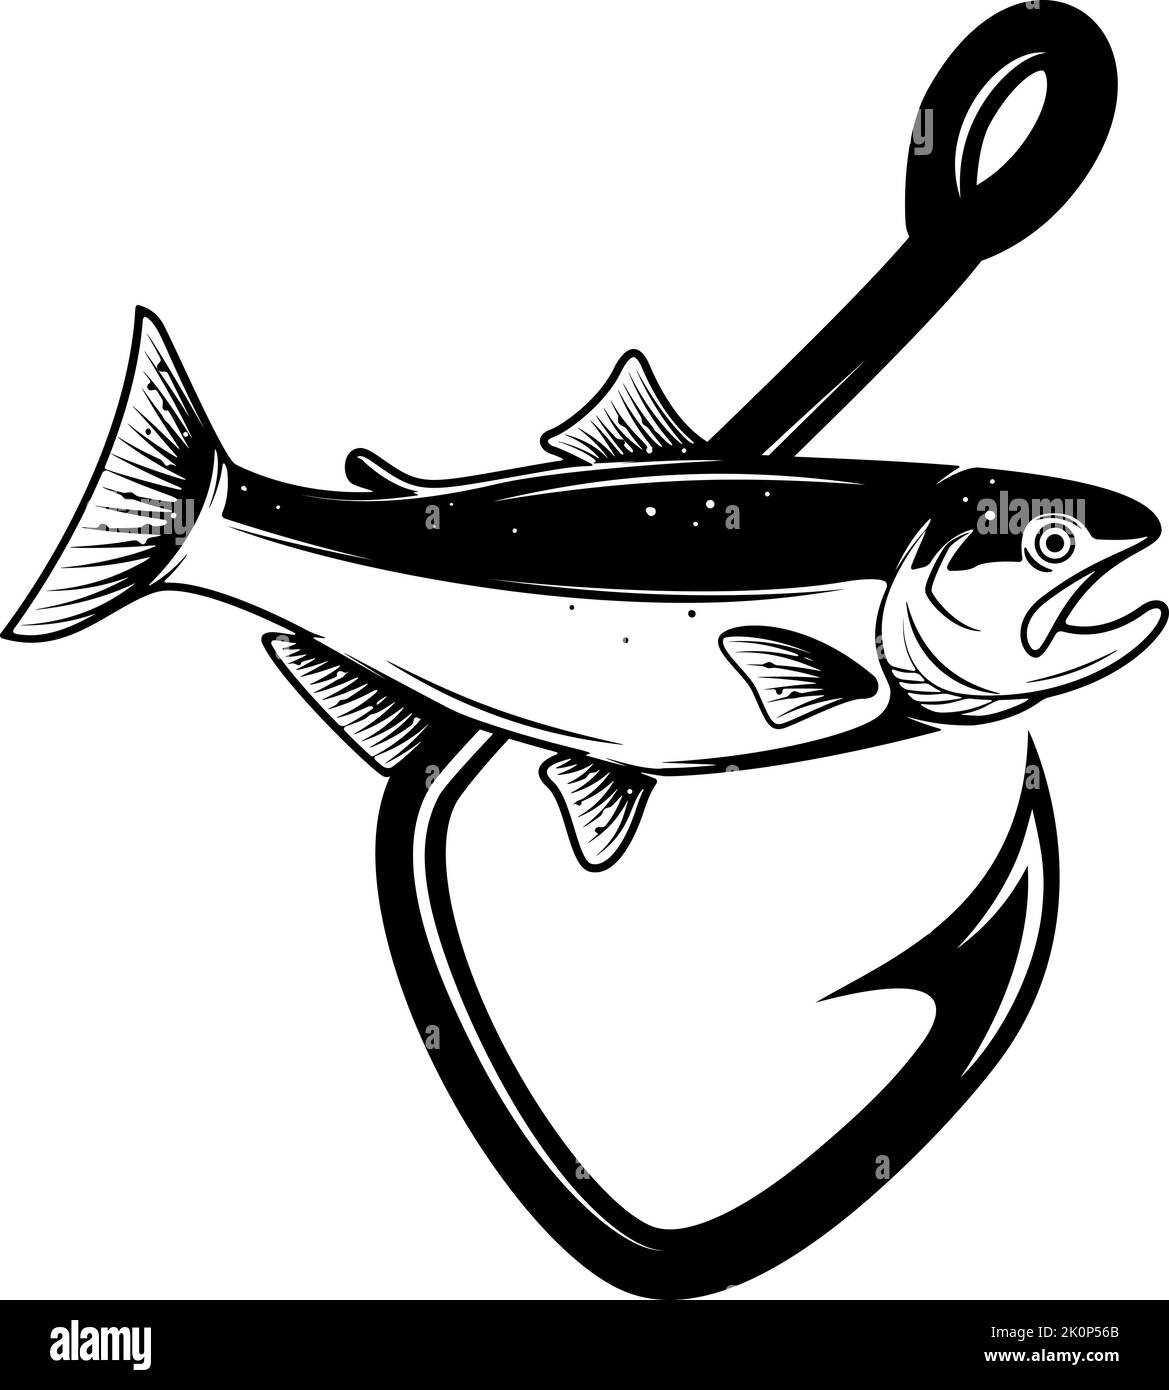 Salmon and fishing hook. Design element for emblem, sign, badge, logo. Vector illustration Stock Vector